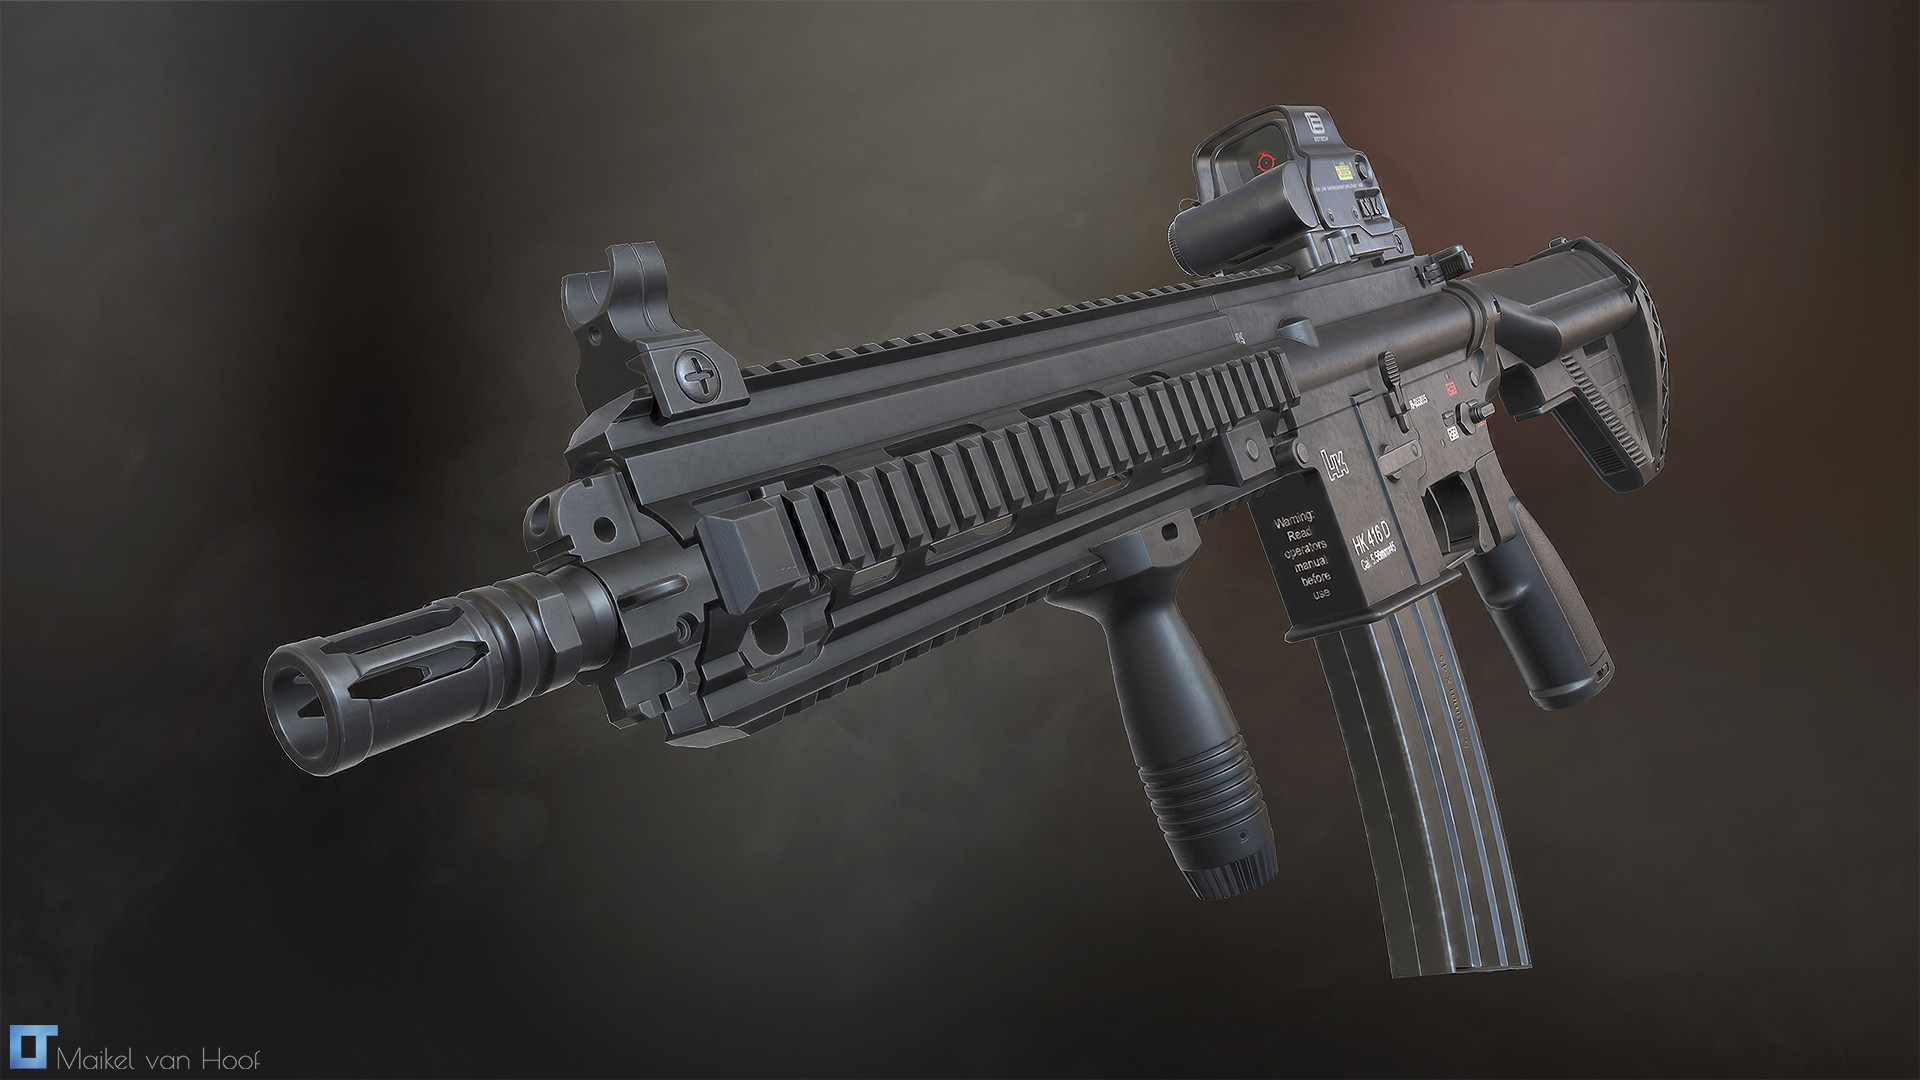 HK416 incl. holosight & vertical grip - Black.